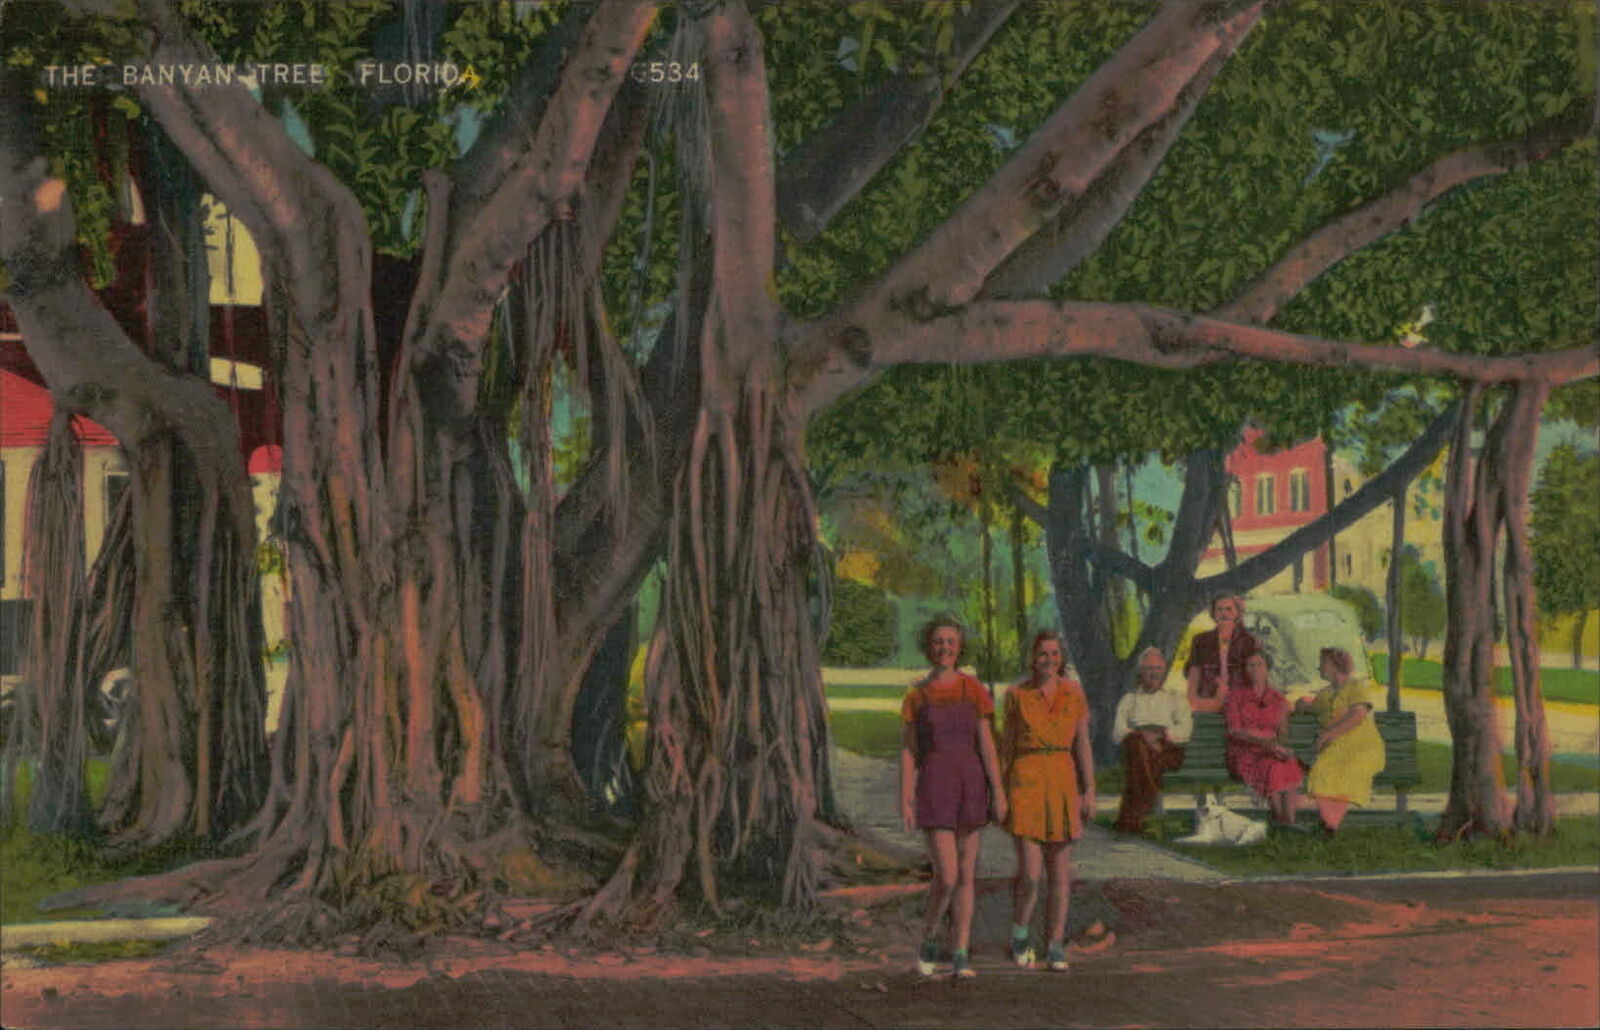 Postcard: THE BANYAN TREE FLORIDA 6534